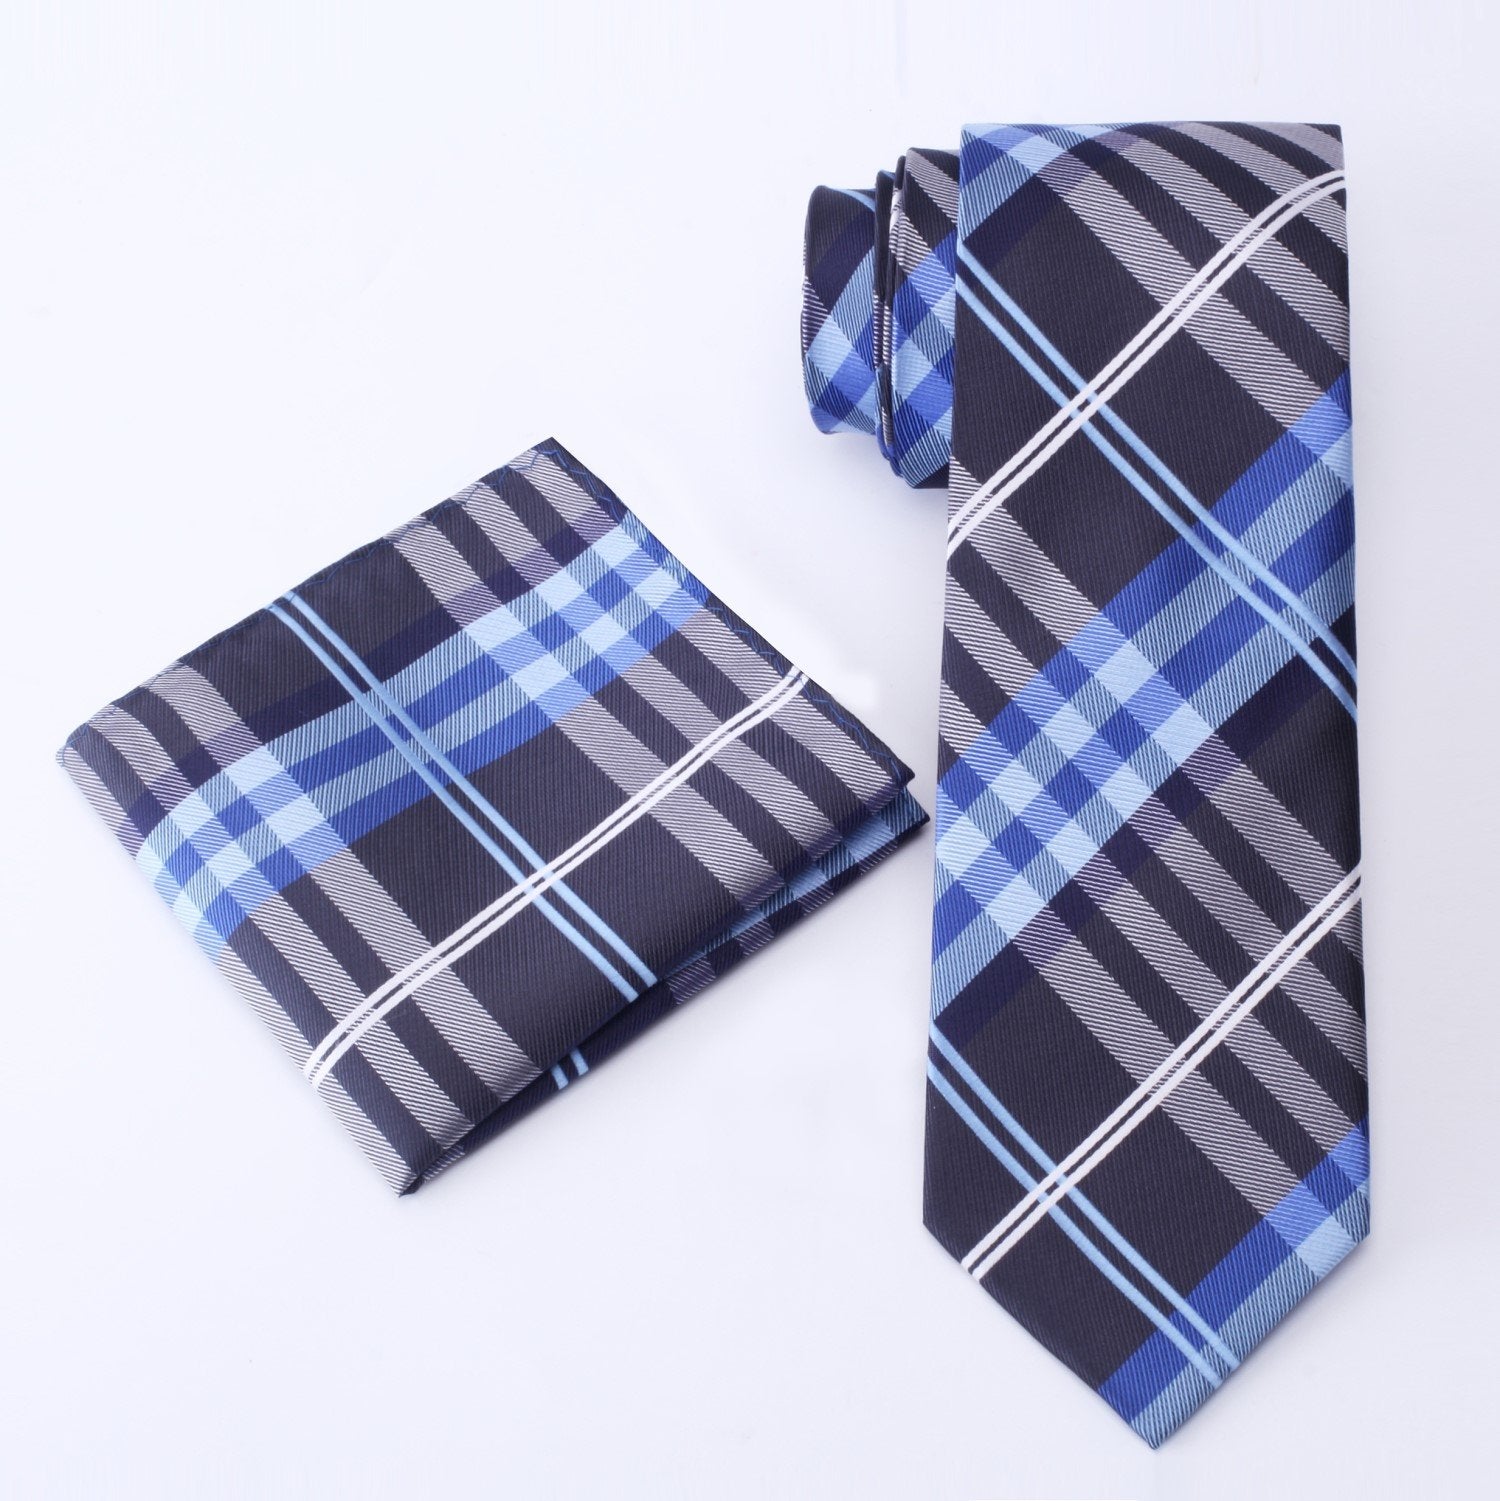 Alt View: A Black, Blue, White Plaid Pattern Necktie With Matching Pocket Square